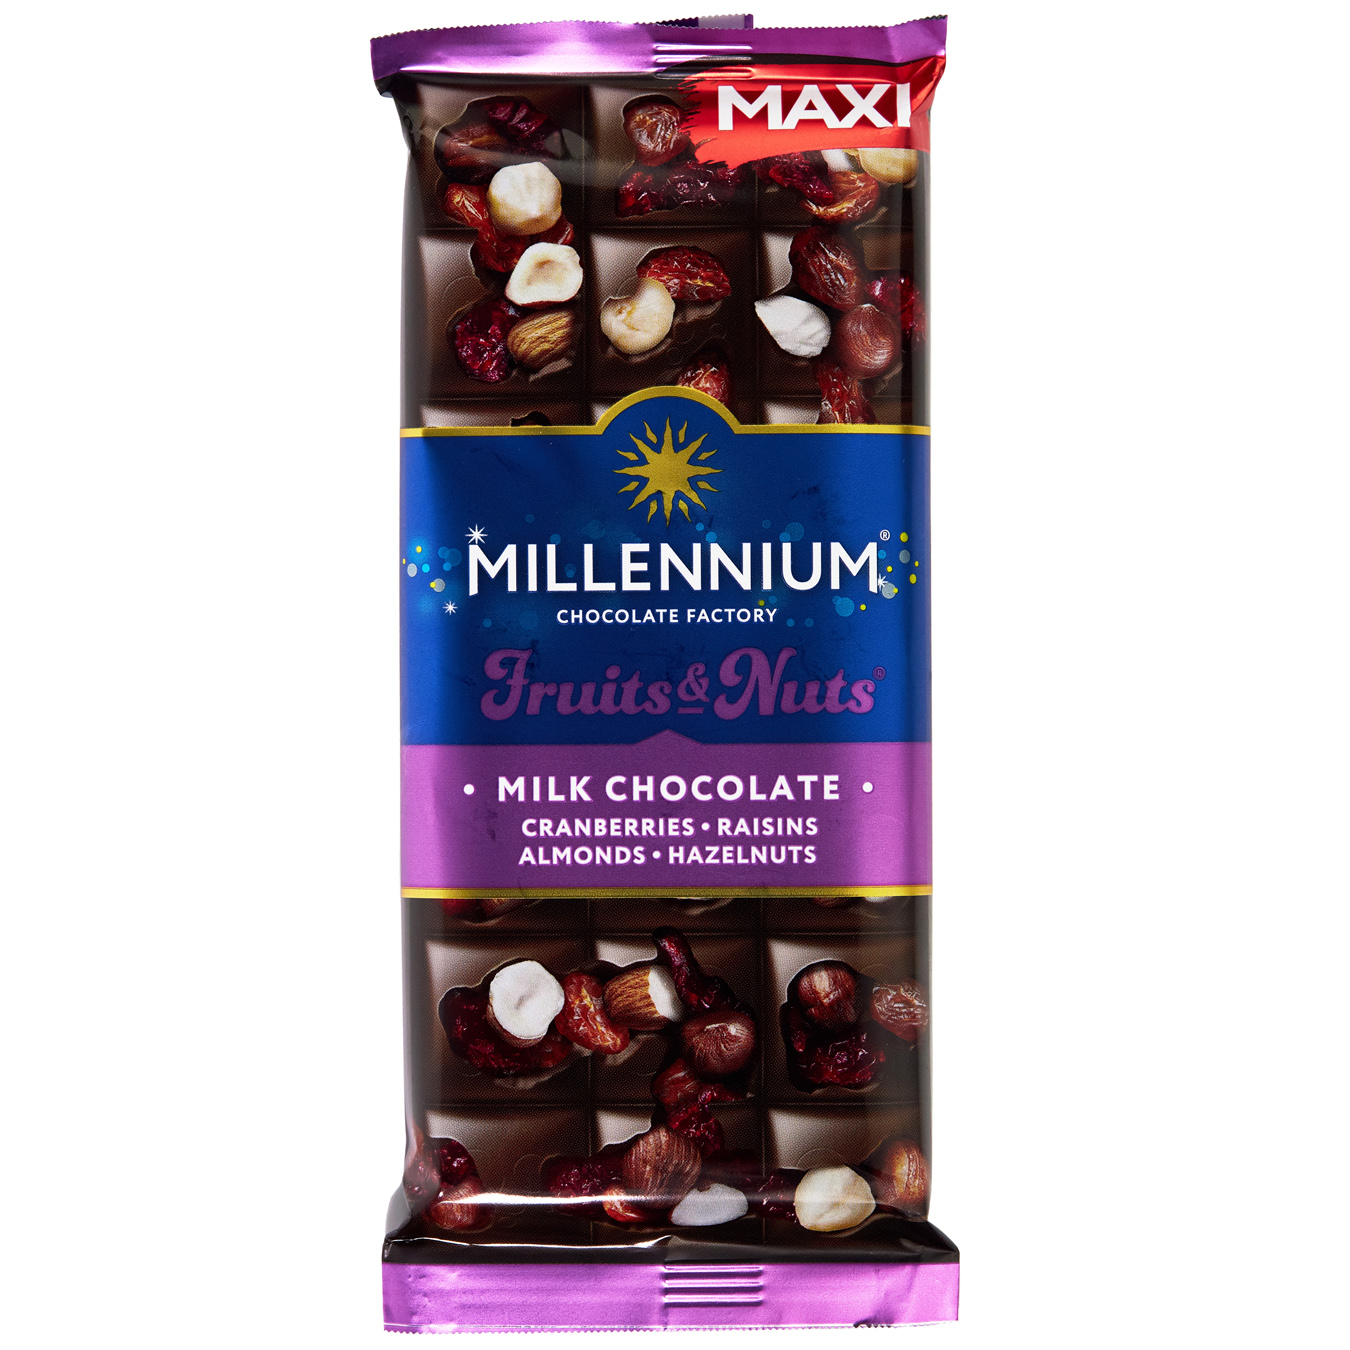 Millennium Fruits&Nuts Milk Chocolate with Almonds, Hazelnuts, Cranberries and Raisins 140g